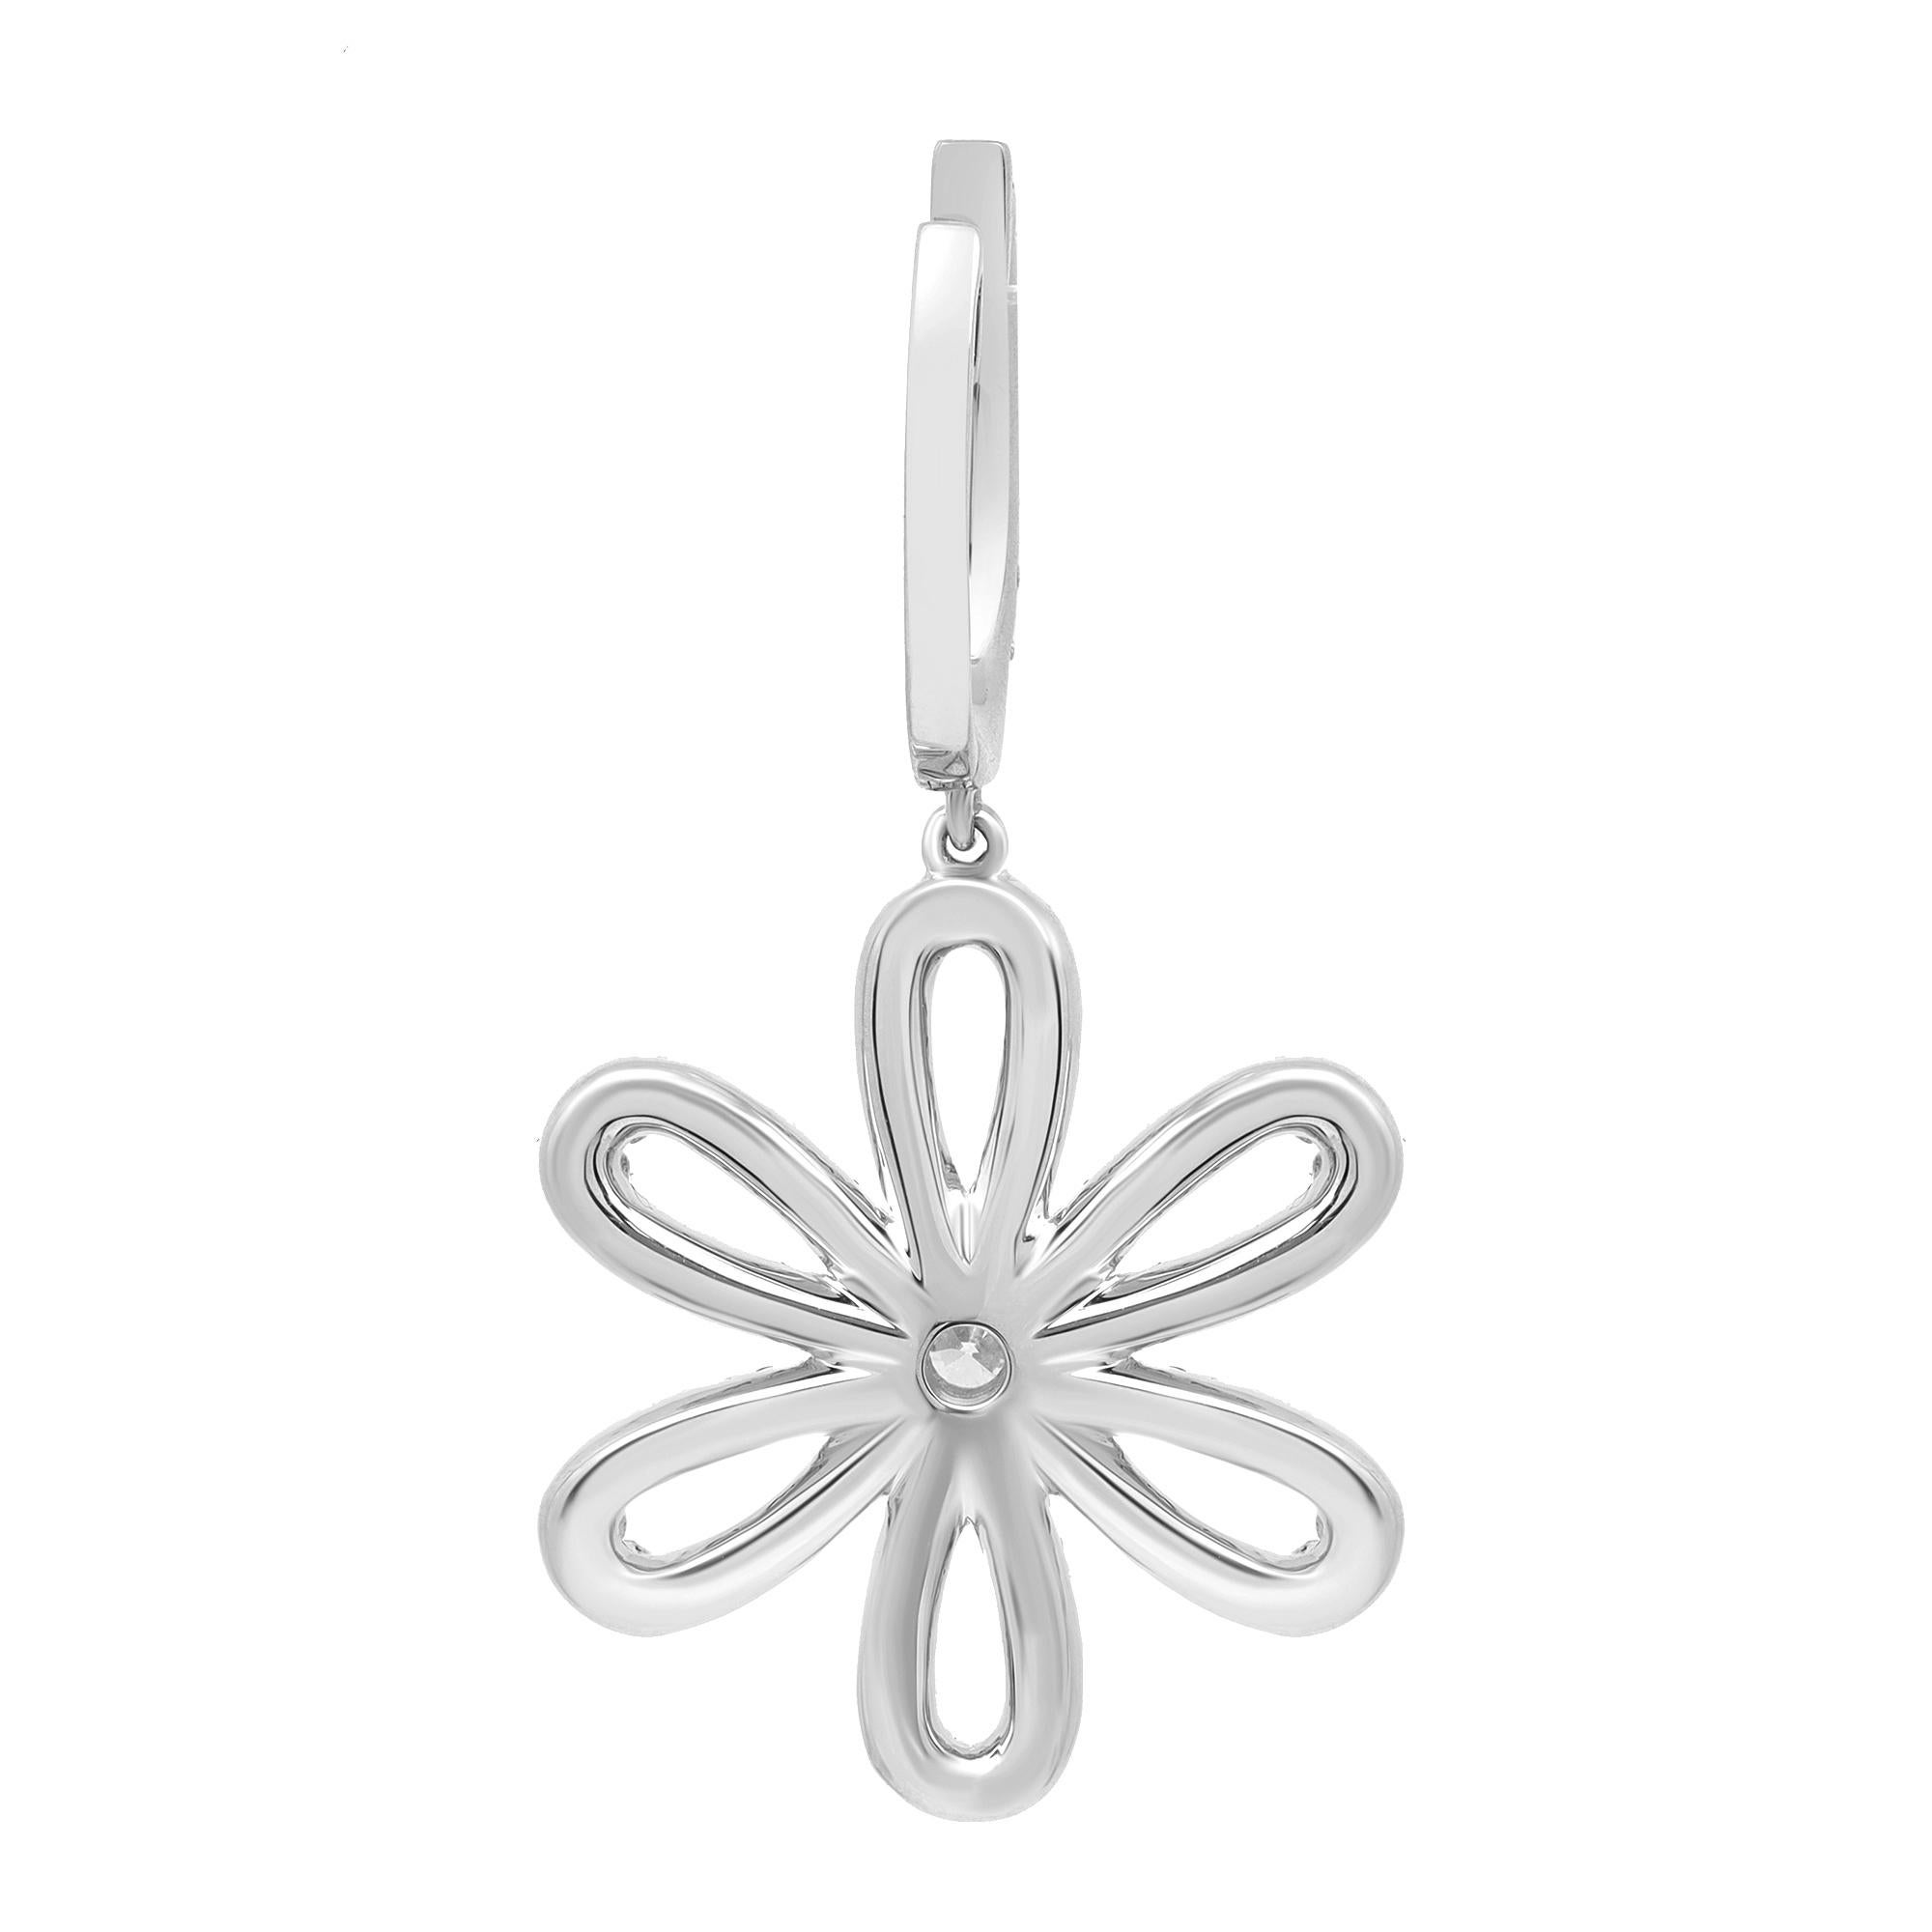 Rachel Koen 2.50cttw Round Cut Diamond Flower Drop Earrings 18K White Gold In New Condition For Sale In New York, NY